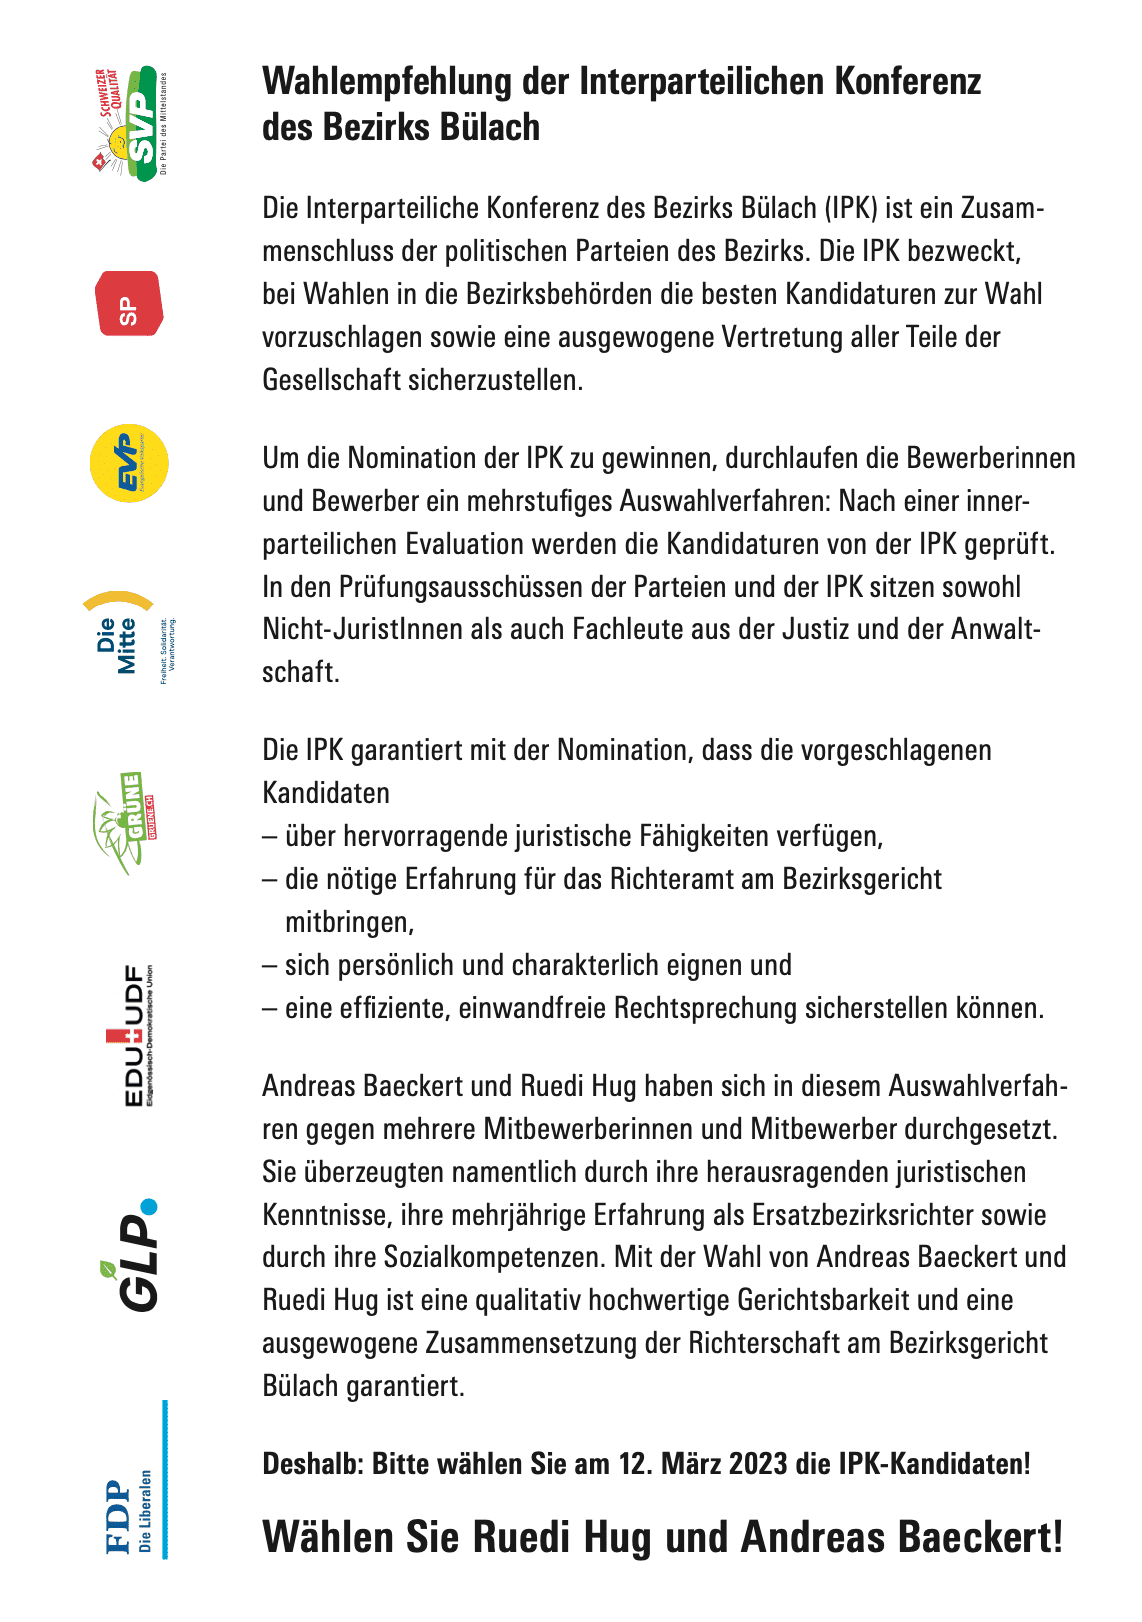 Bezirksrichterwahlen - Wahlempfehlung der IPK Bezirk Bülach